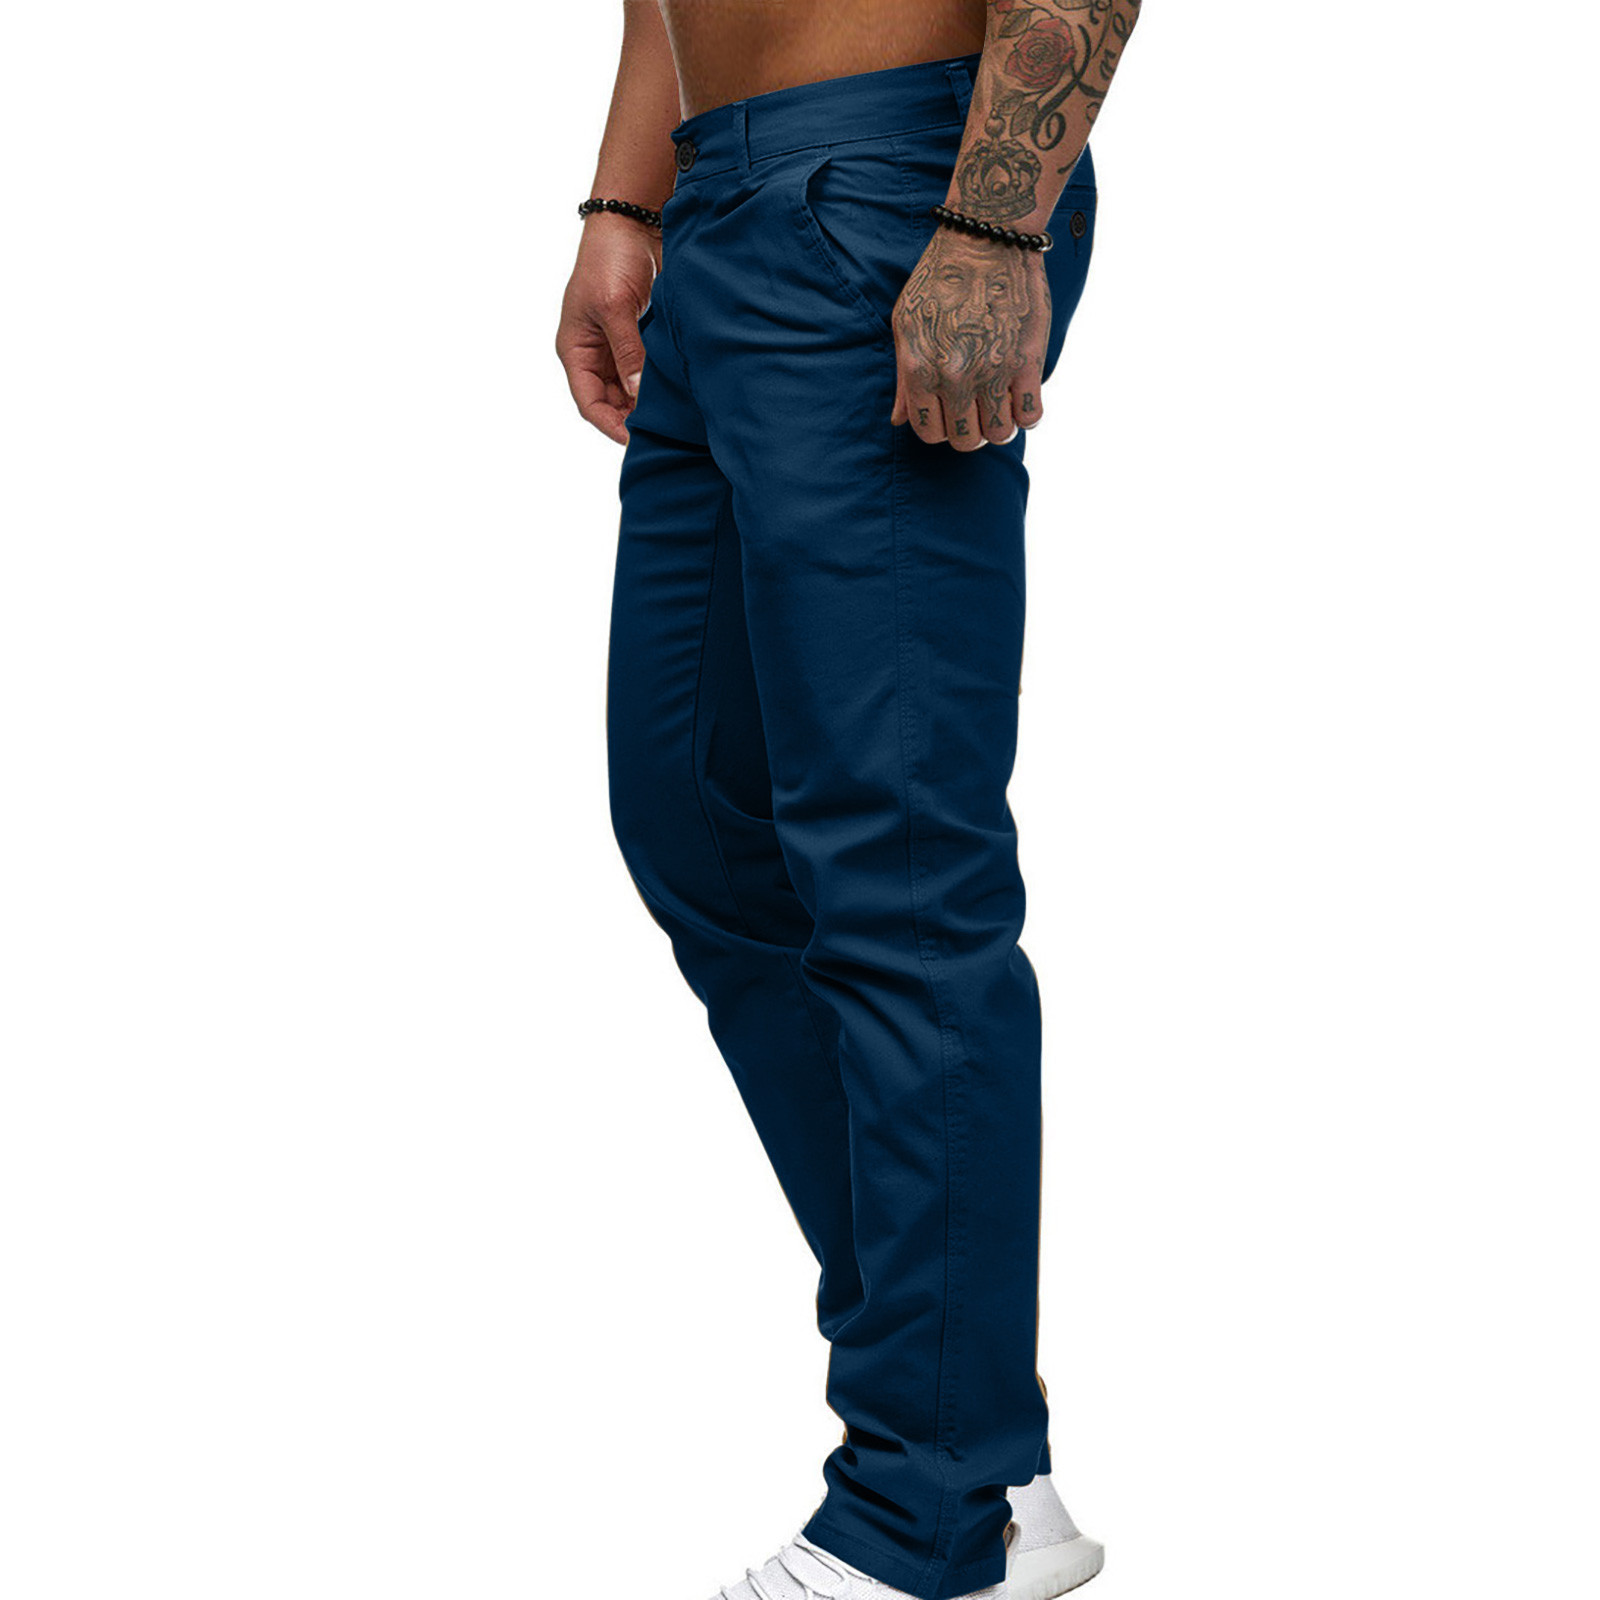 DeHolifer Mens Casual Chinos Pants Cotton Slacks Elastic Waistband Classic Fit Flat Front Khaki Pant Navy L - image 4 of 5